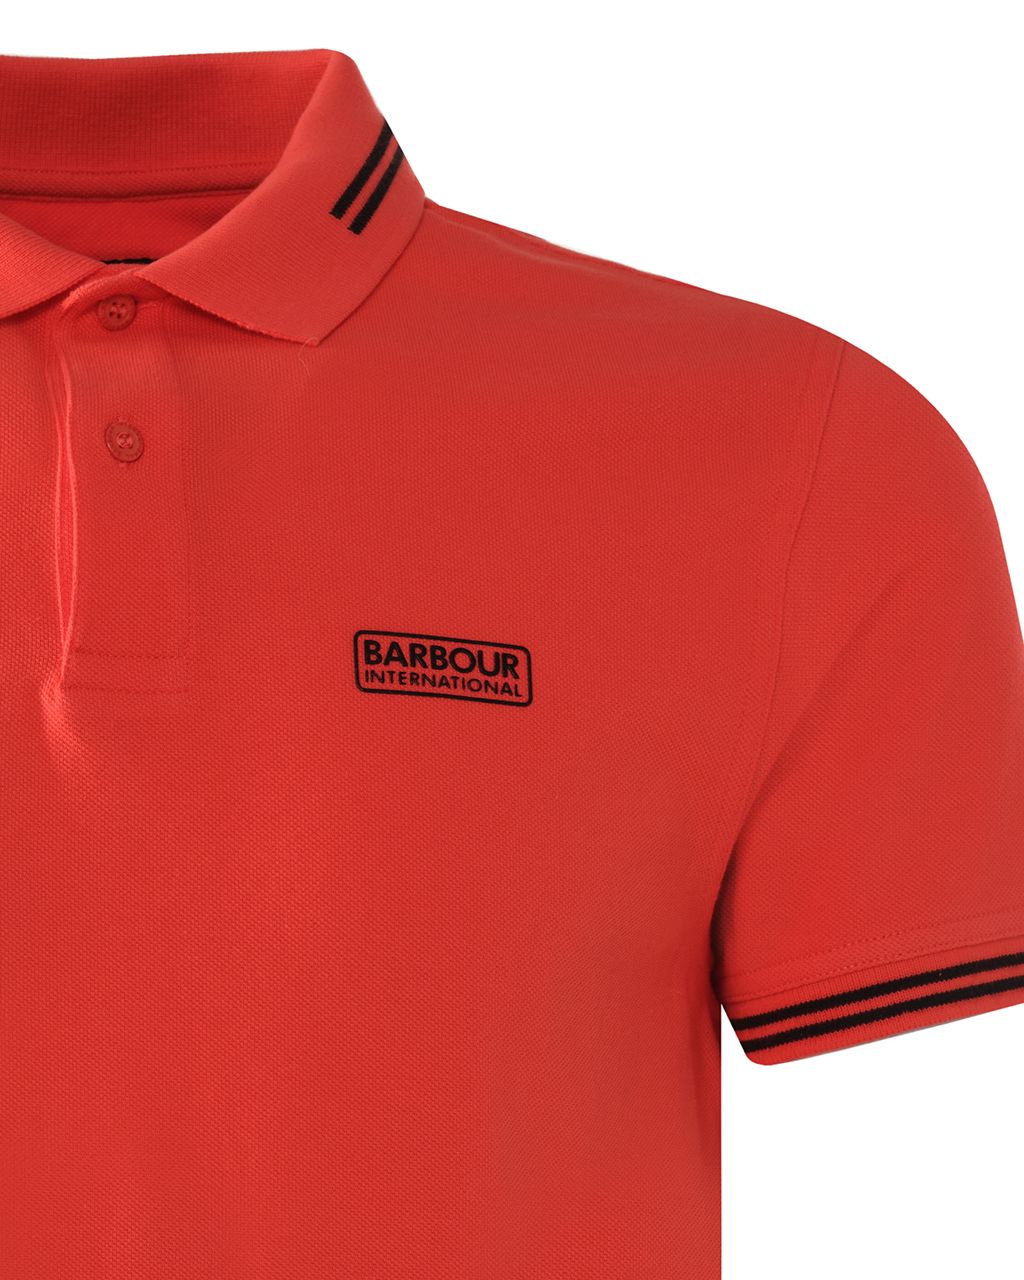 Barbour International Essential tipped Polo KM Oranje 075711-001-L